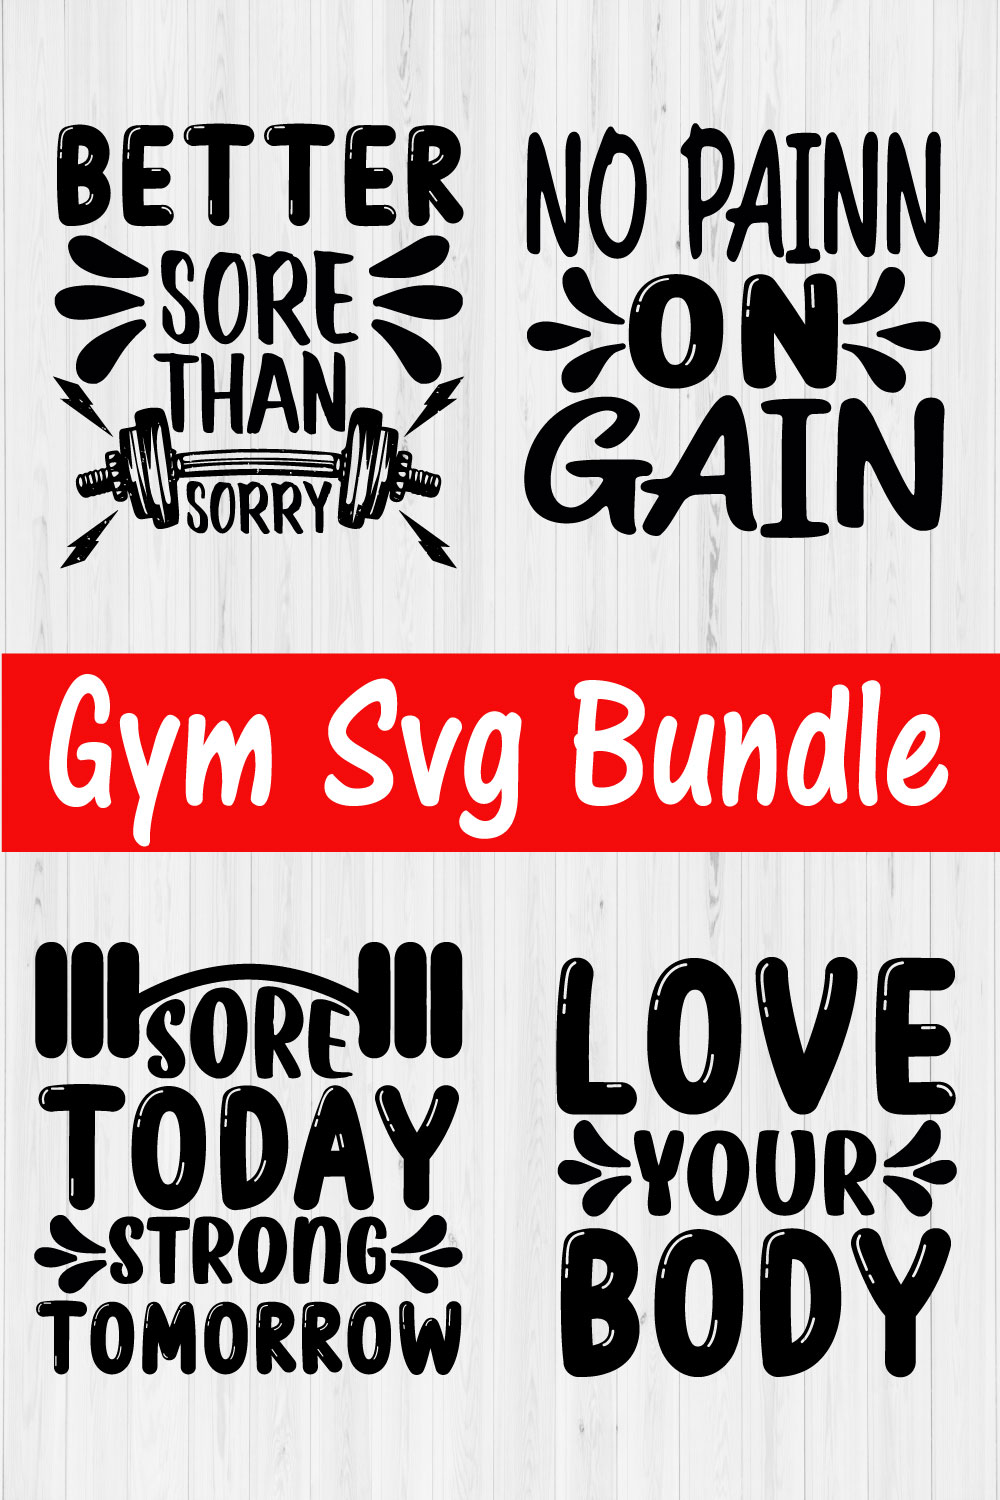 Gym Svg Bundle Vol6 pinterest preview image.